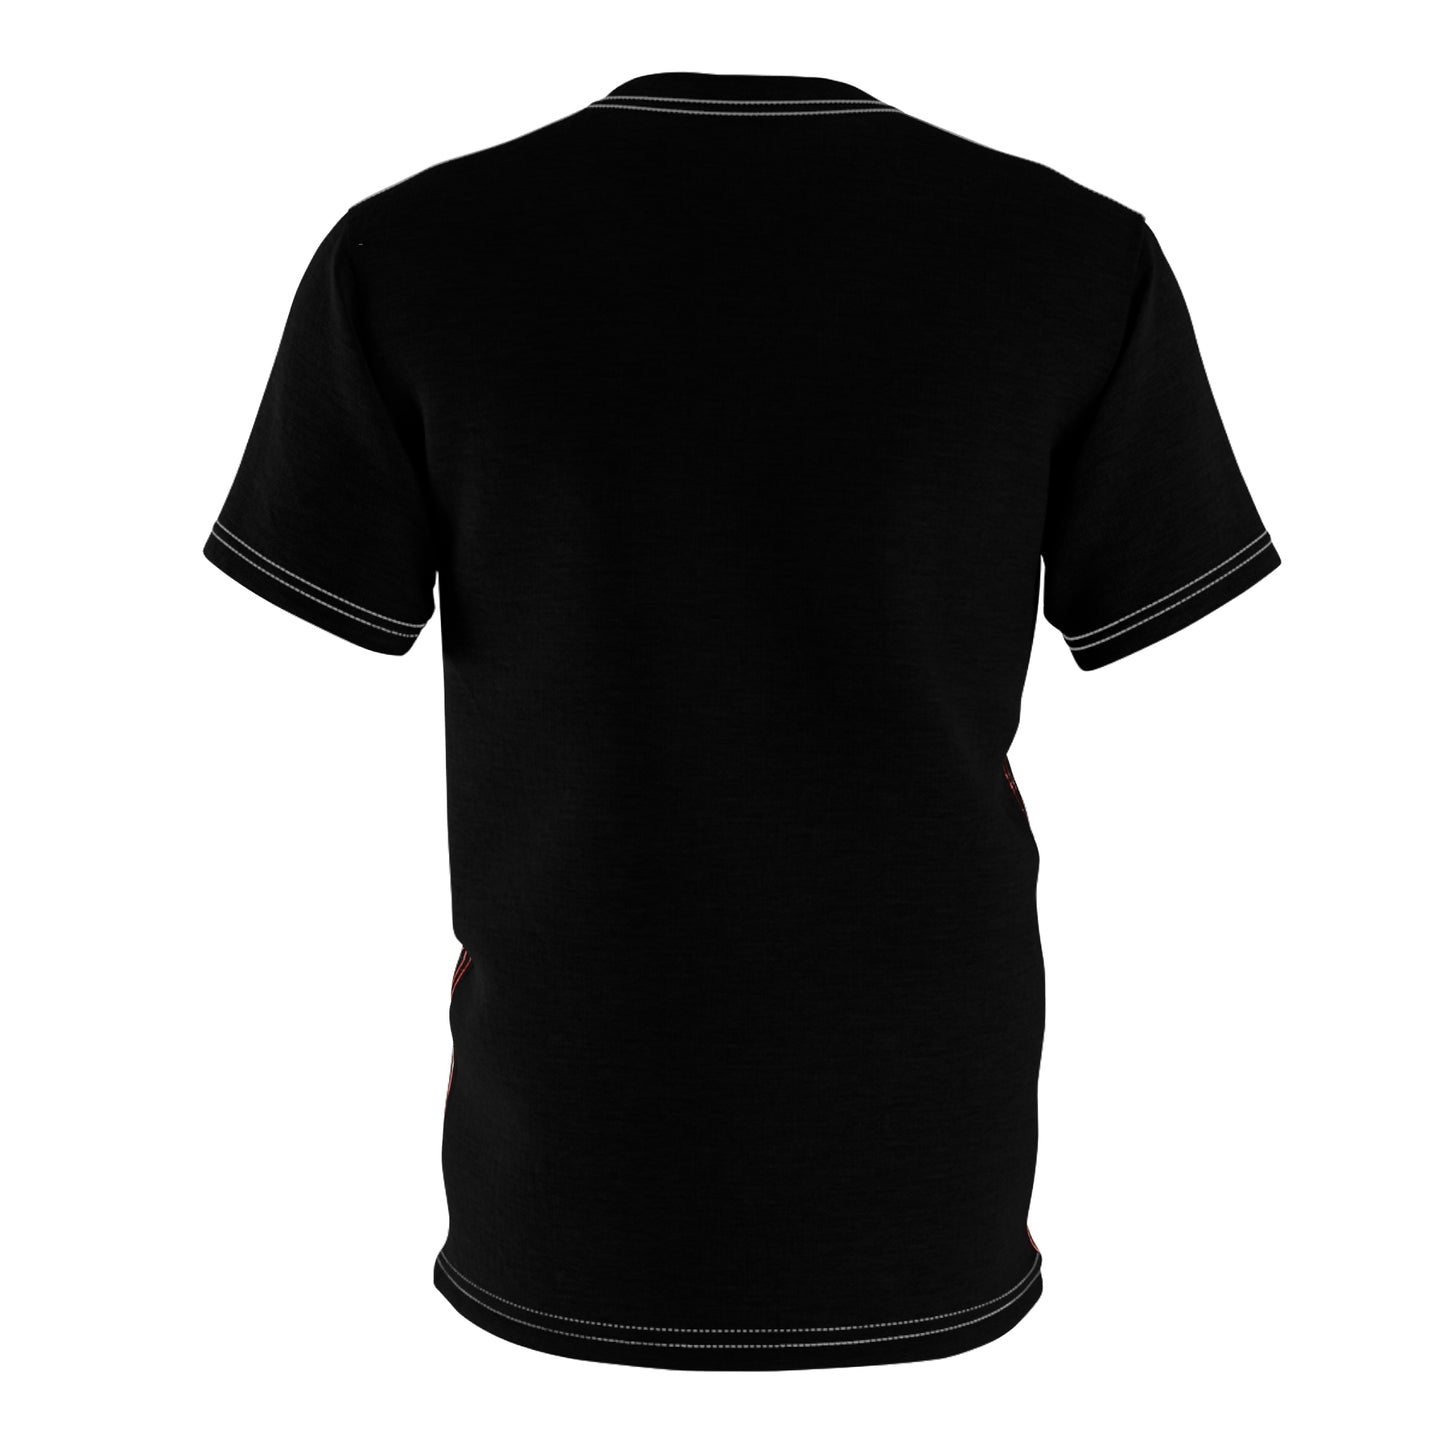 Mörderin - Unisex All-Over Print Cut & Sew T-Shirt